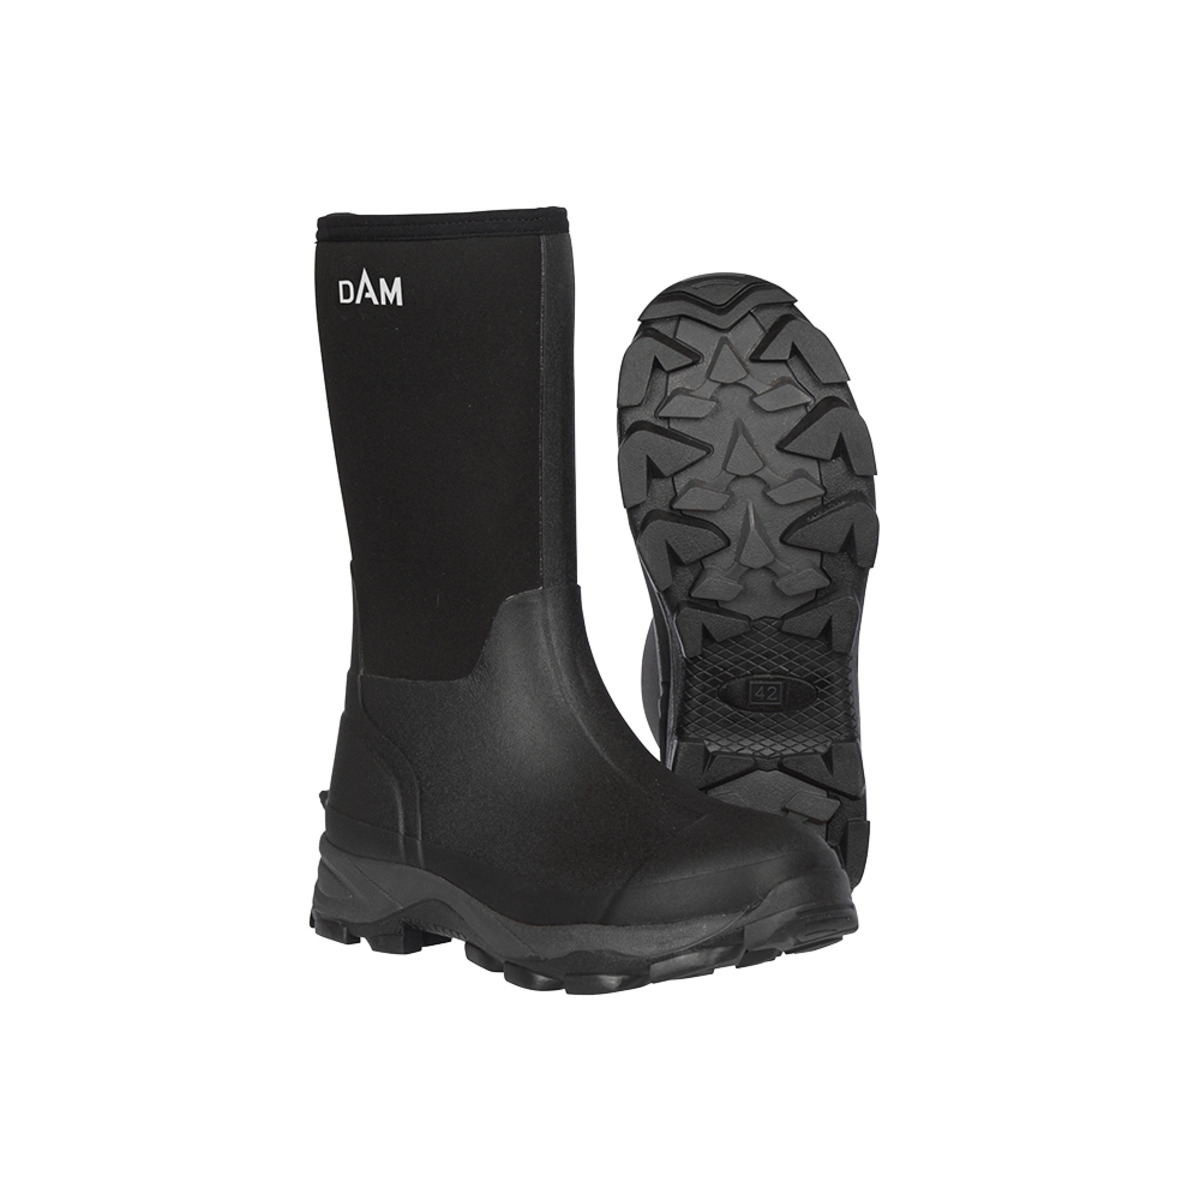 Dam Tira Boots Rubber/neoprene - 44/9 BLACK